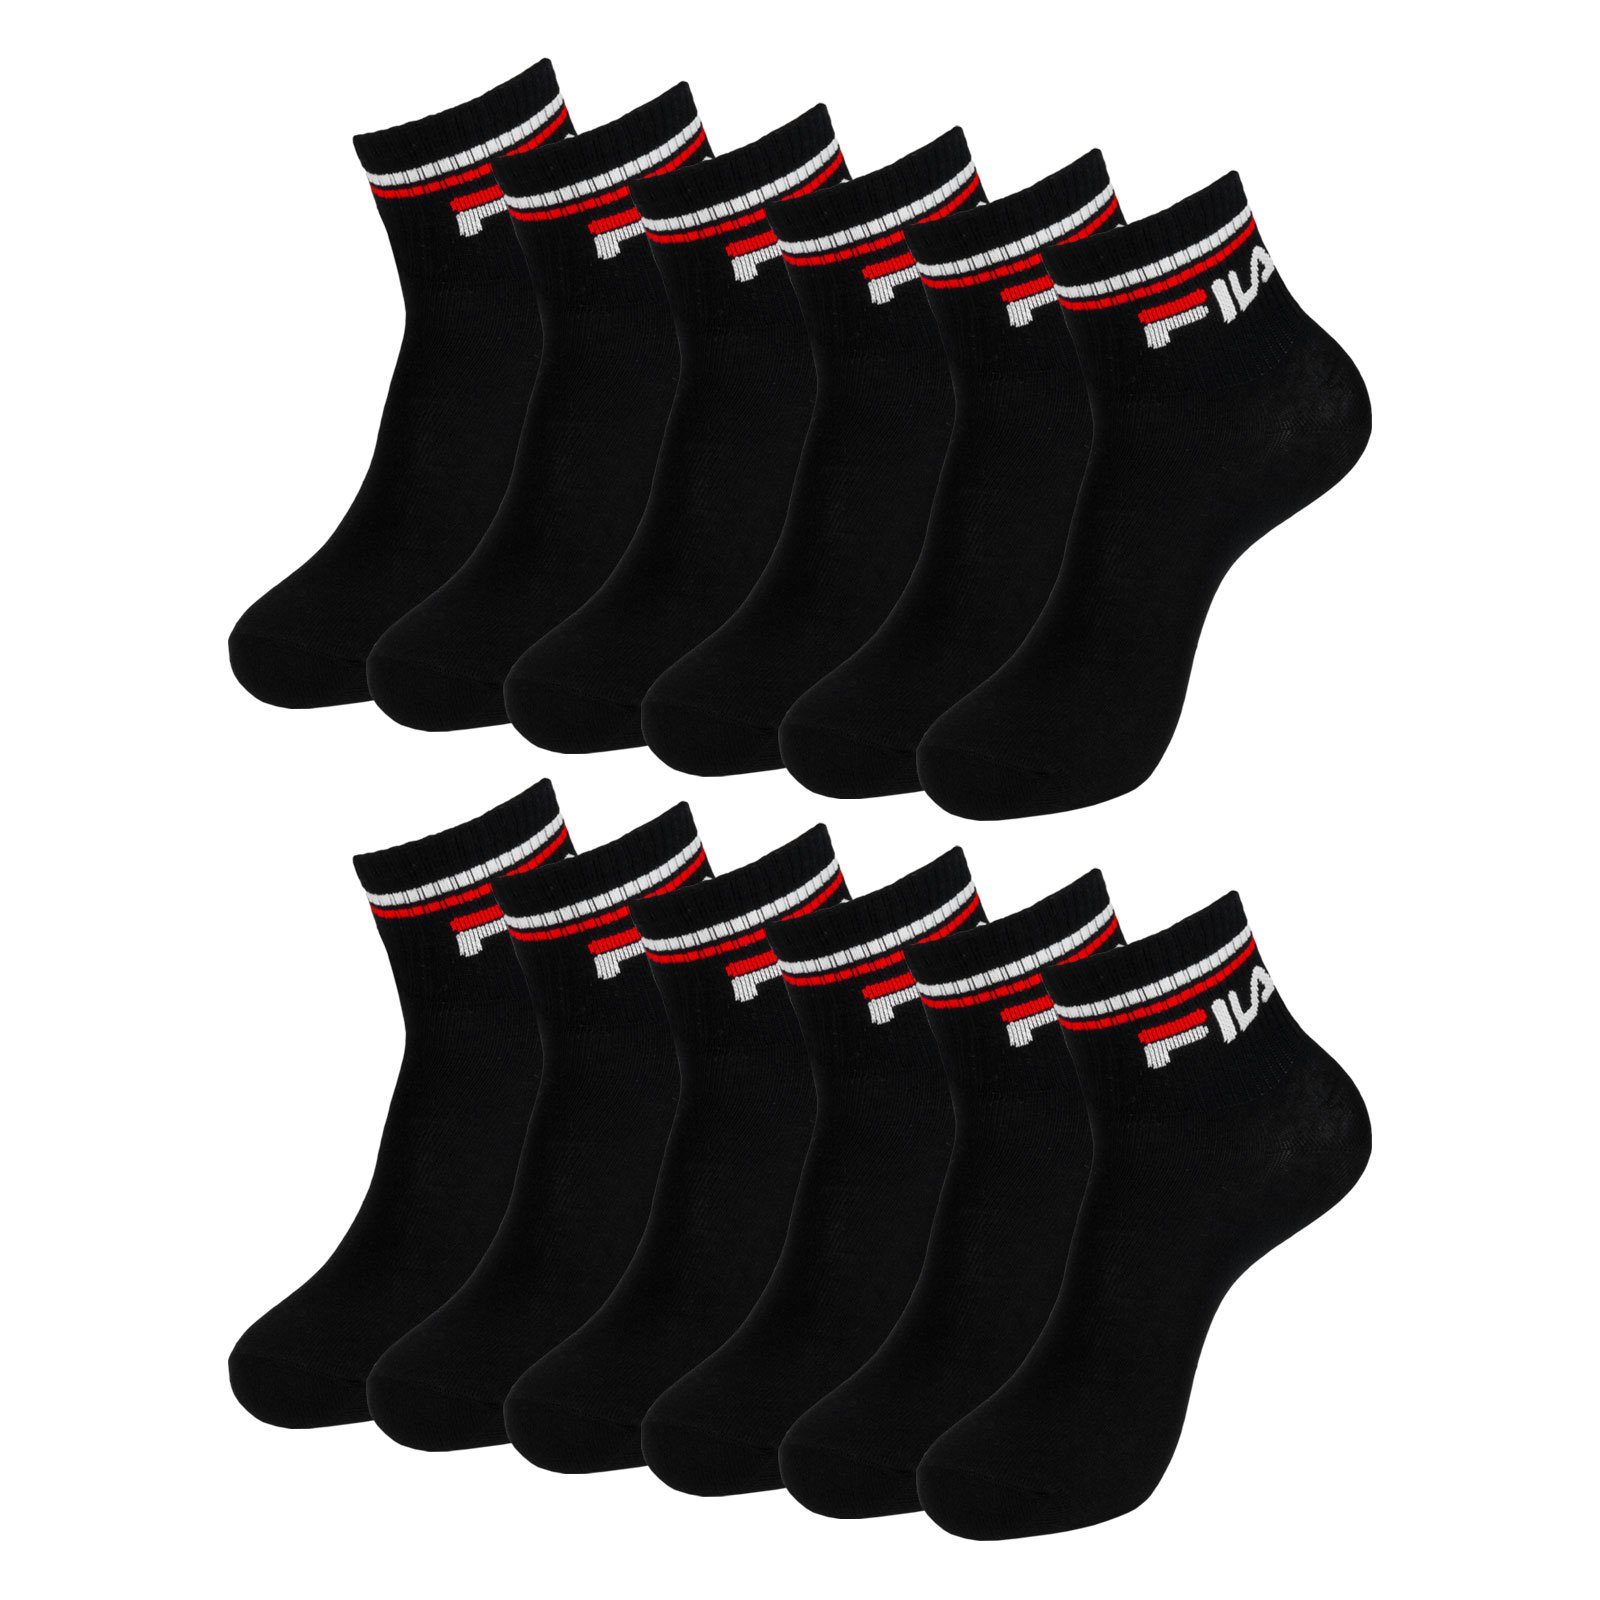 Fila Kurzsocken Quarter Socks Calza (6-Paar) im sportlichen Look mit Rippbündchen 200 black